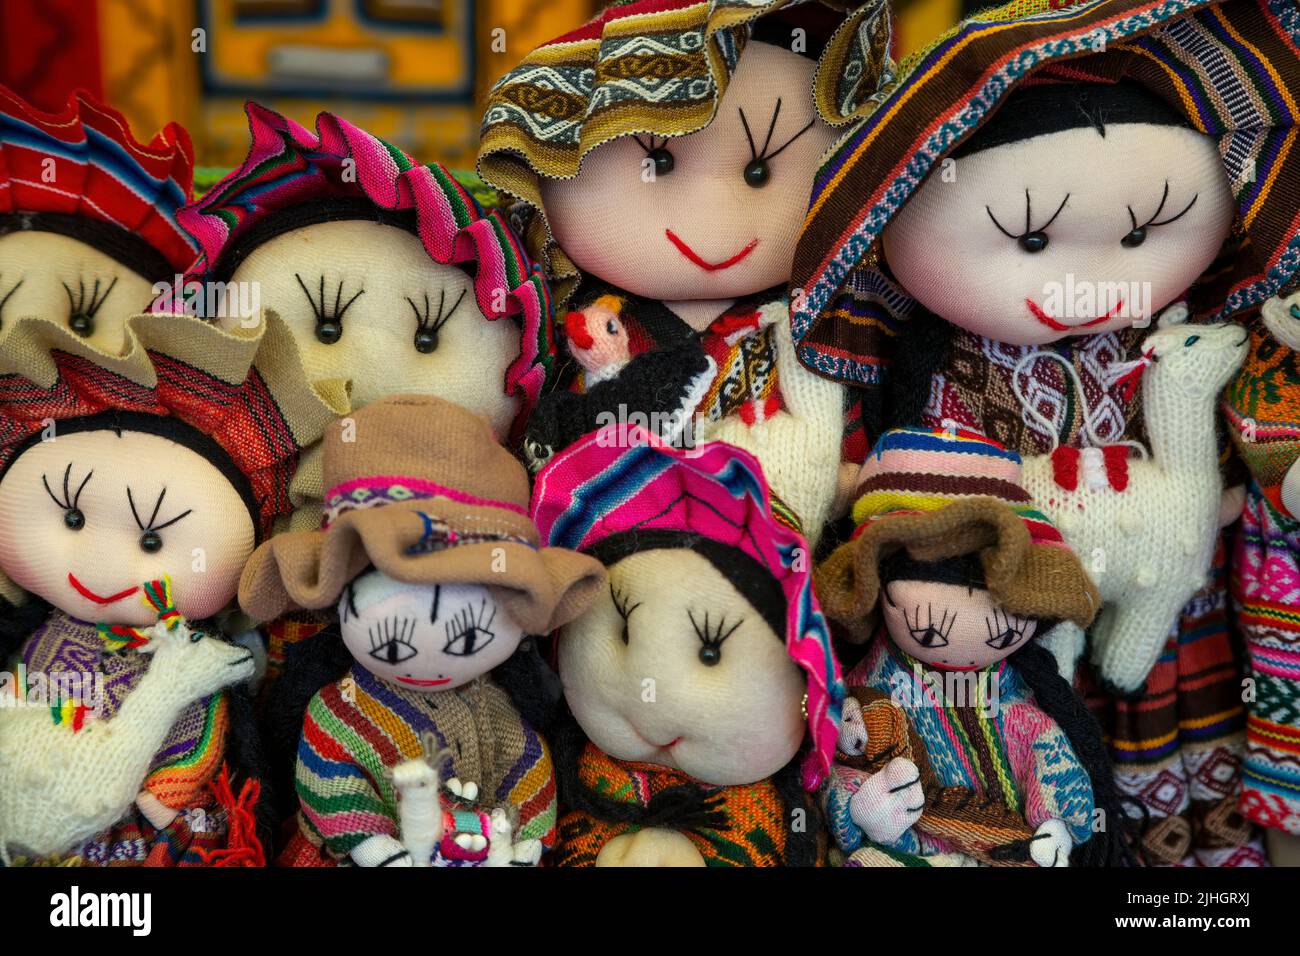 Quechua dolls, Pisac Artisans Market, Cusco, Peru Stock Photo